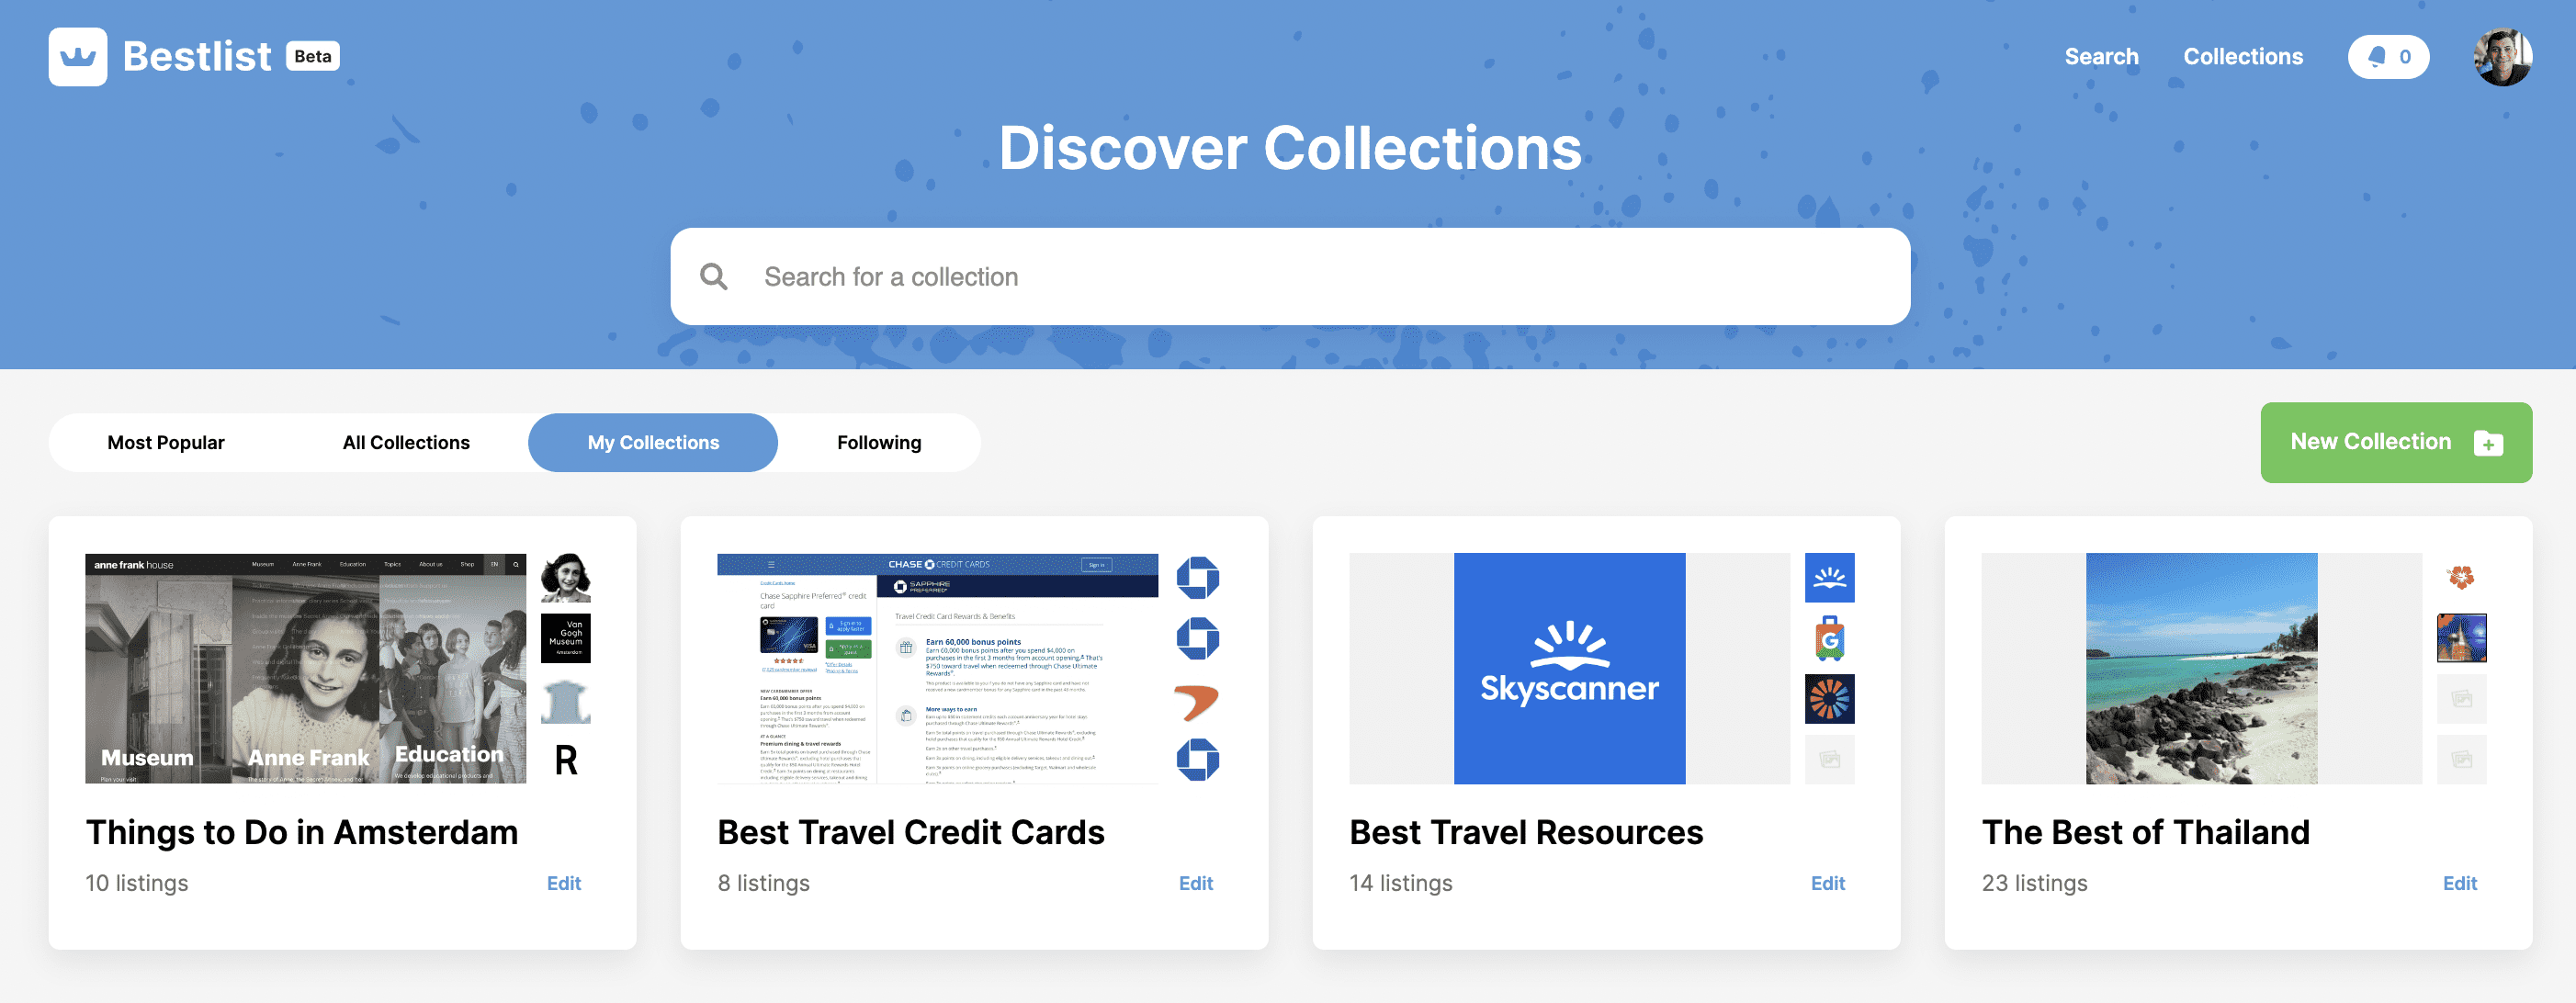 A screenshot of Nomadic Matt's travel collections on Bestlist.com